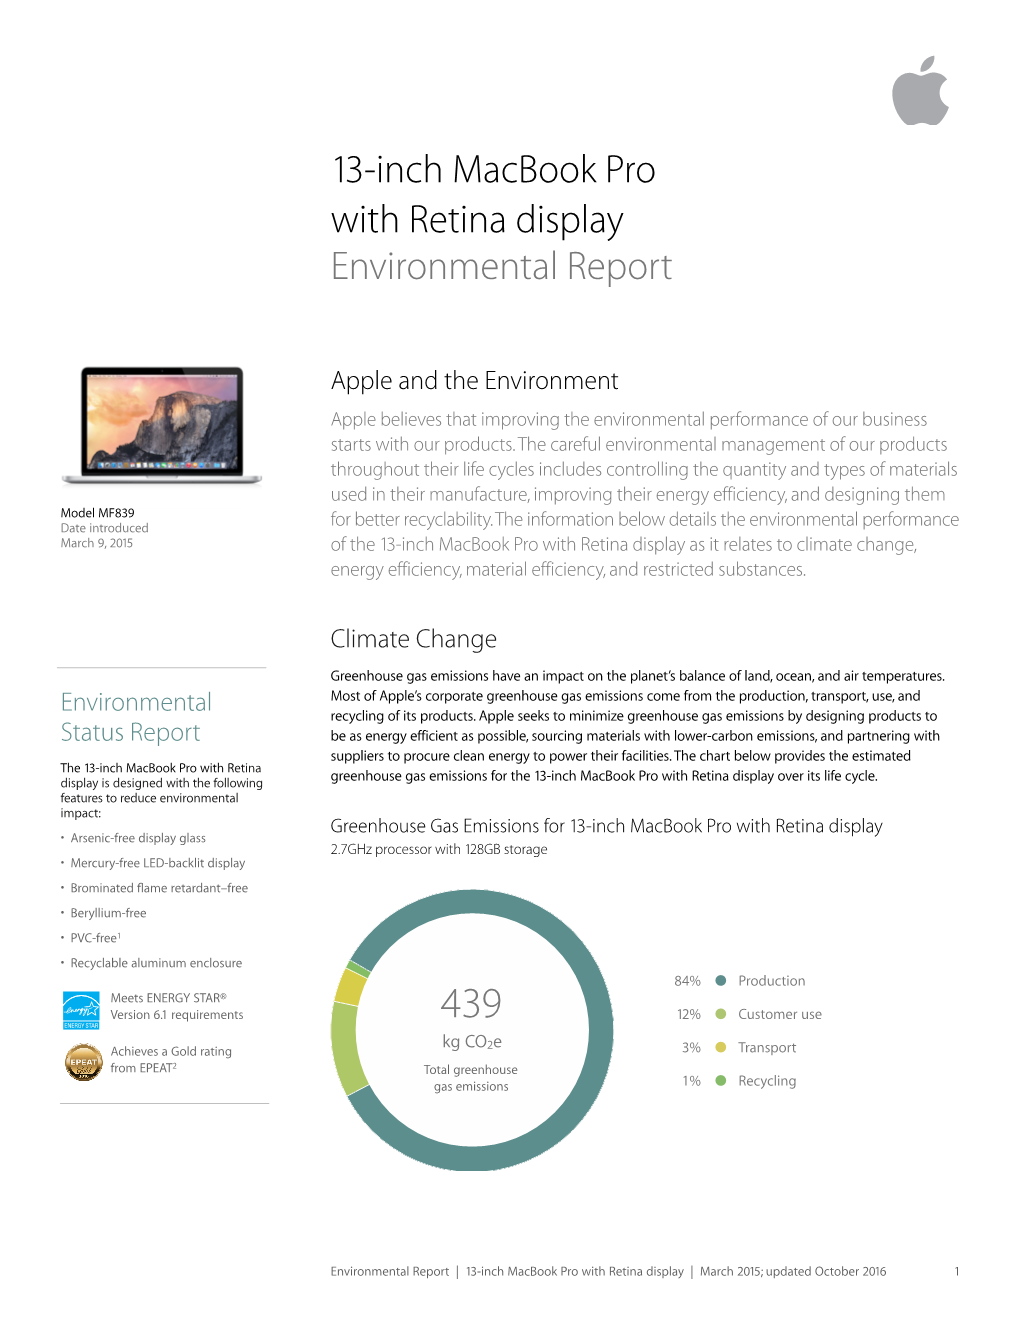 13-Inch Macbook Pro with Retina Display Environmental Report